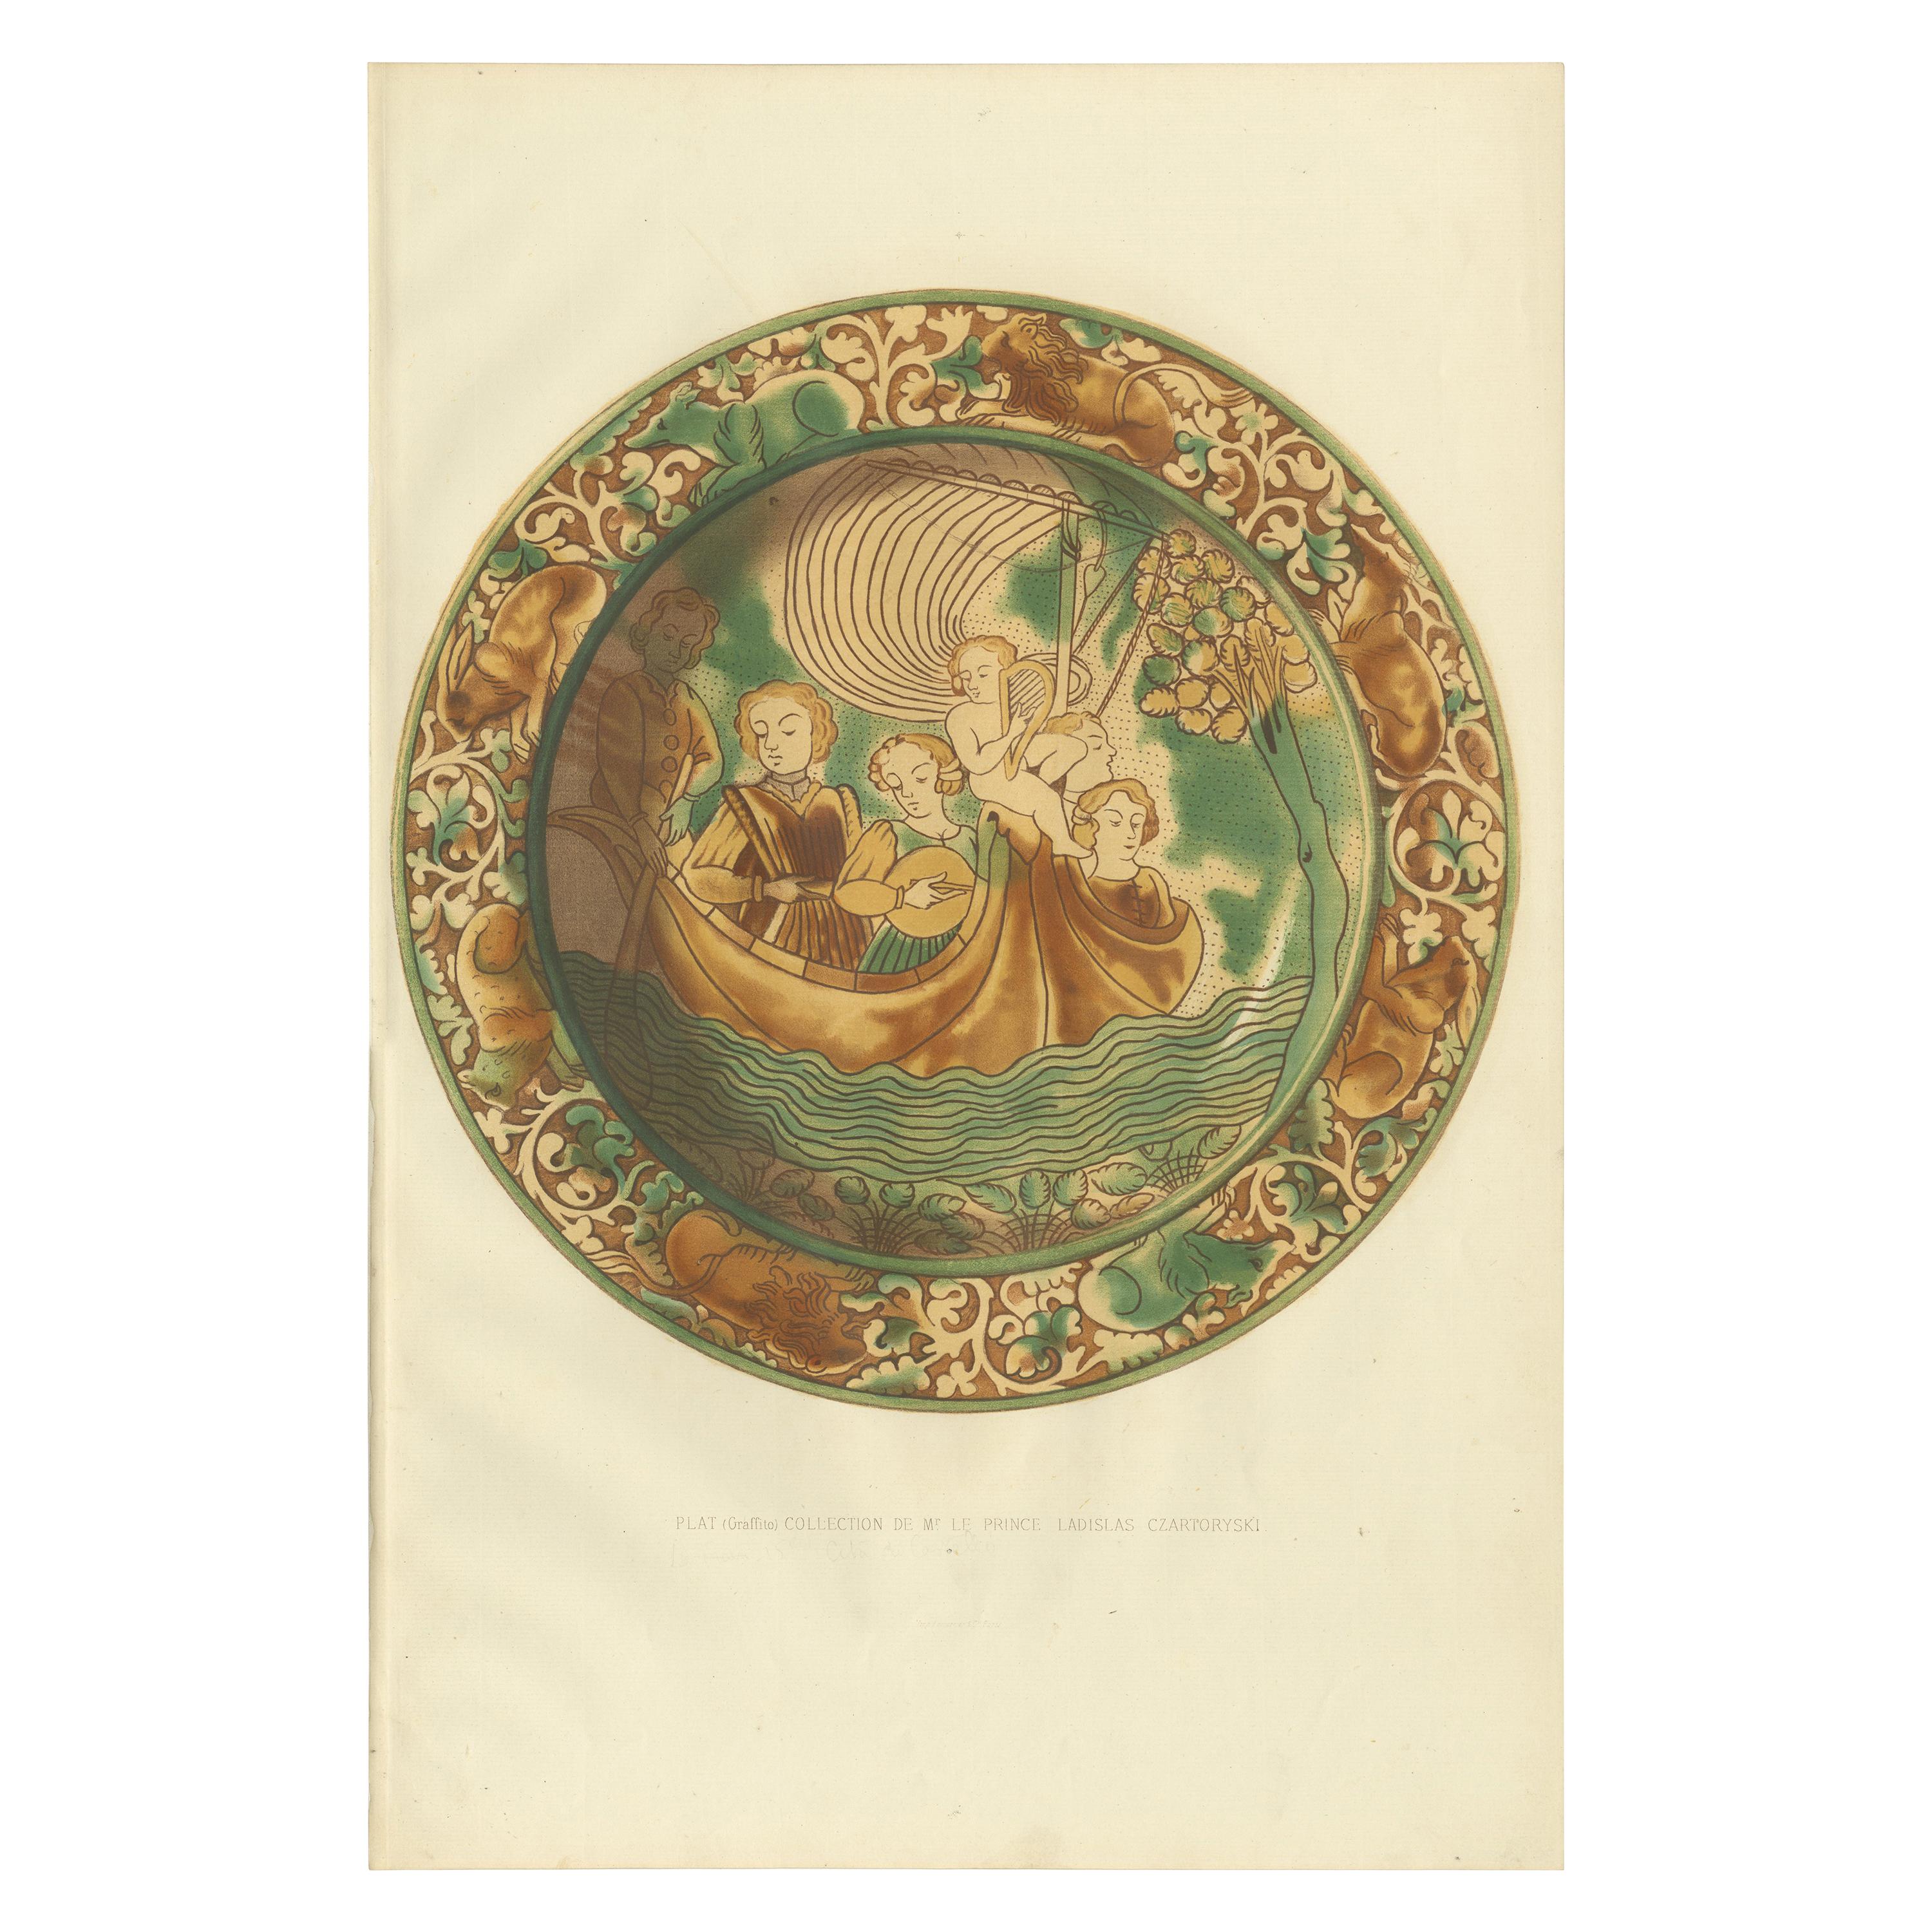 Antique Print of a Plate of Mr. le Prince Ladislas Czartoryski by Delange '1869' For Sale